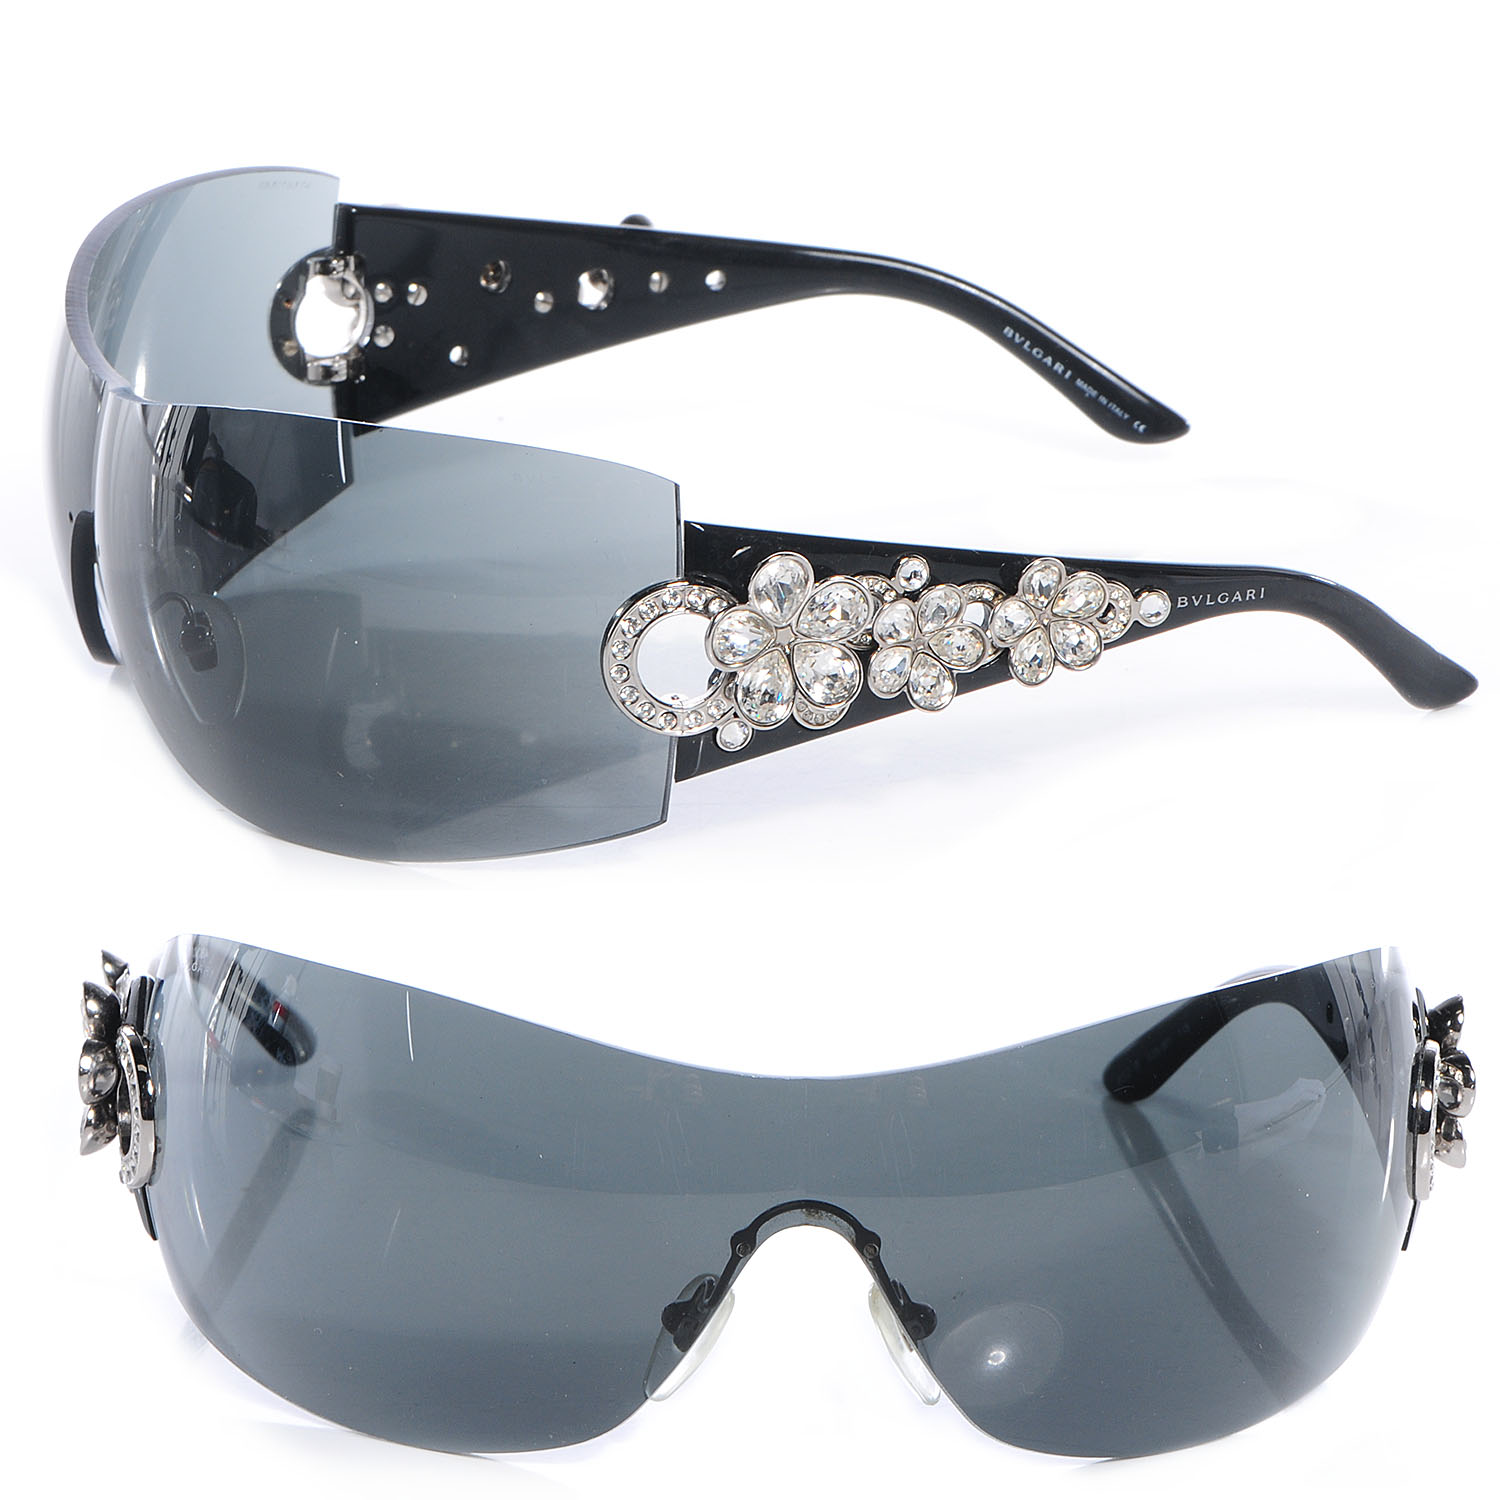 bvlgari sunglasses with crystals